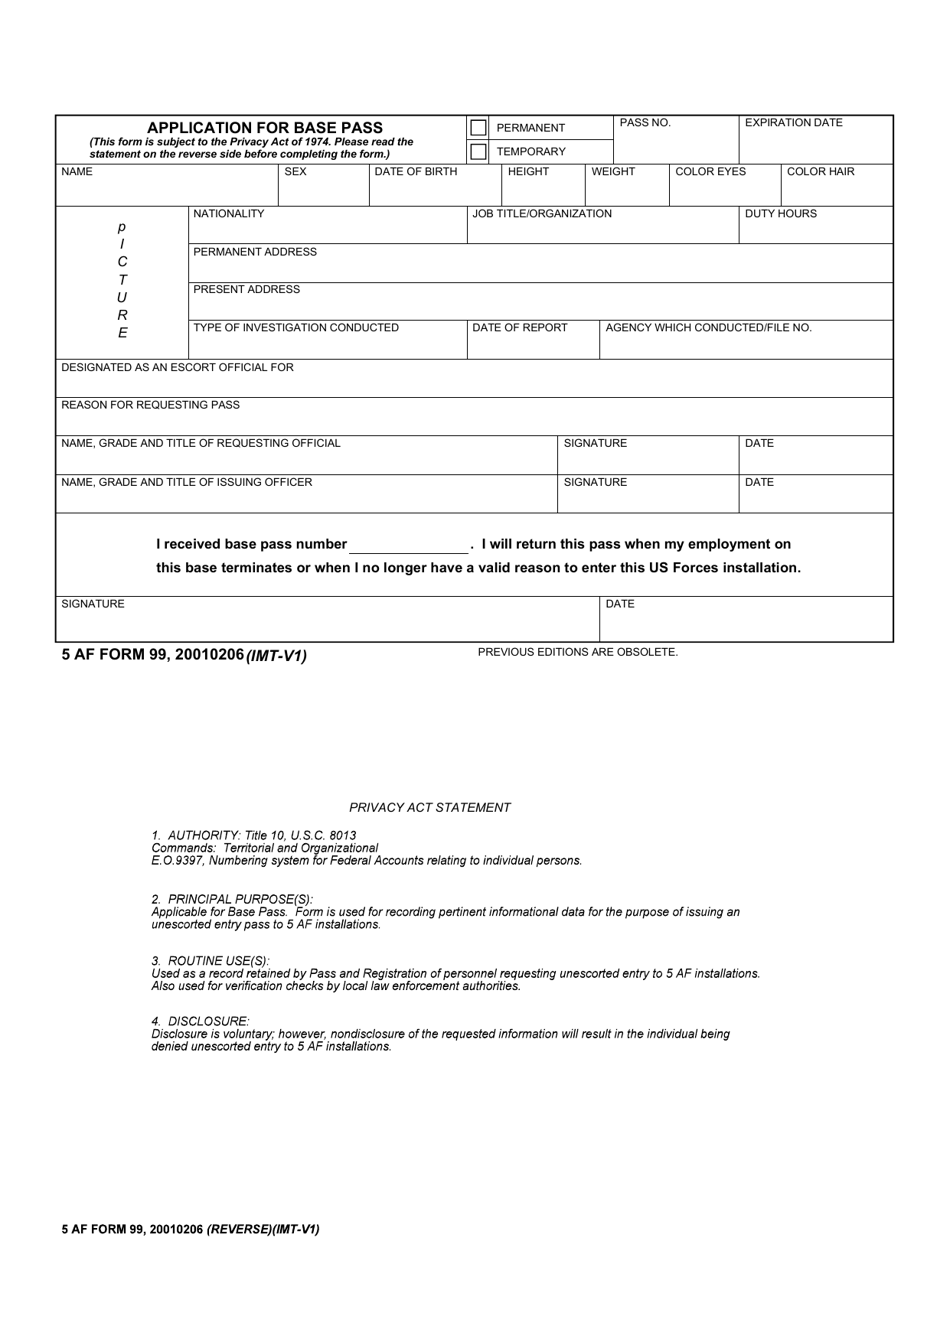 5 AF Form 99 Application for Base Pass, Page 1